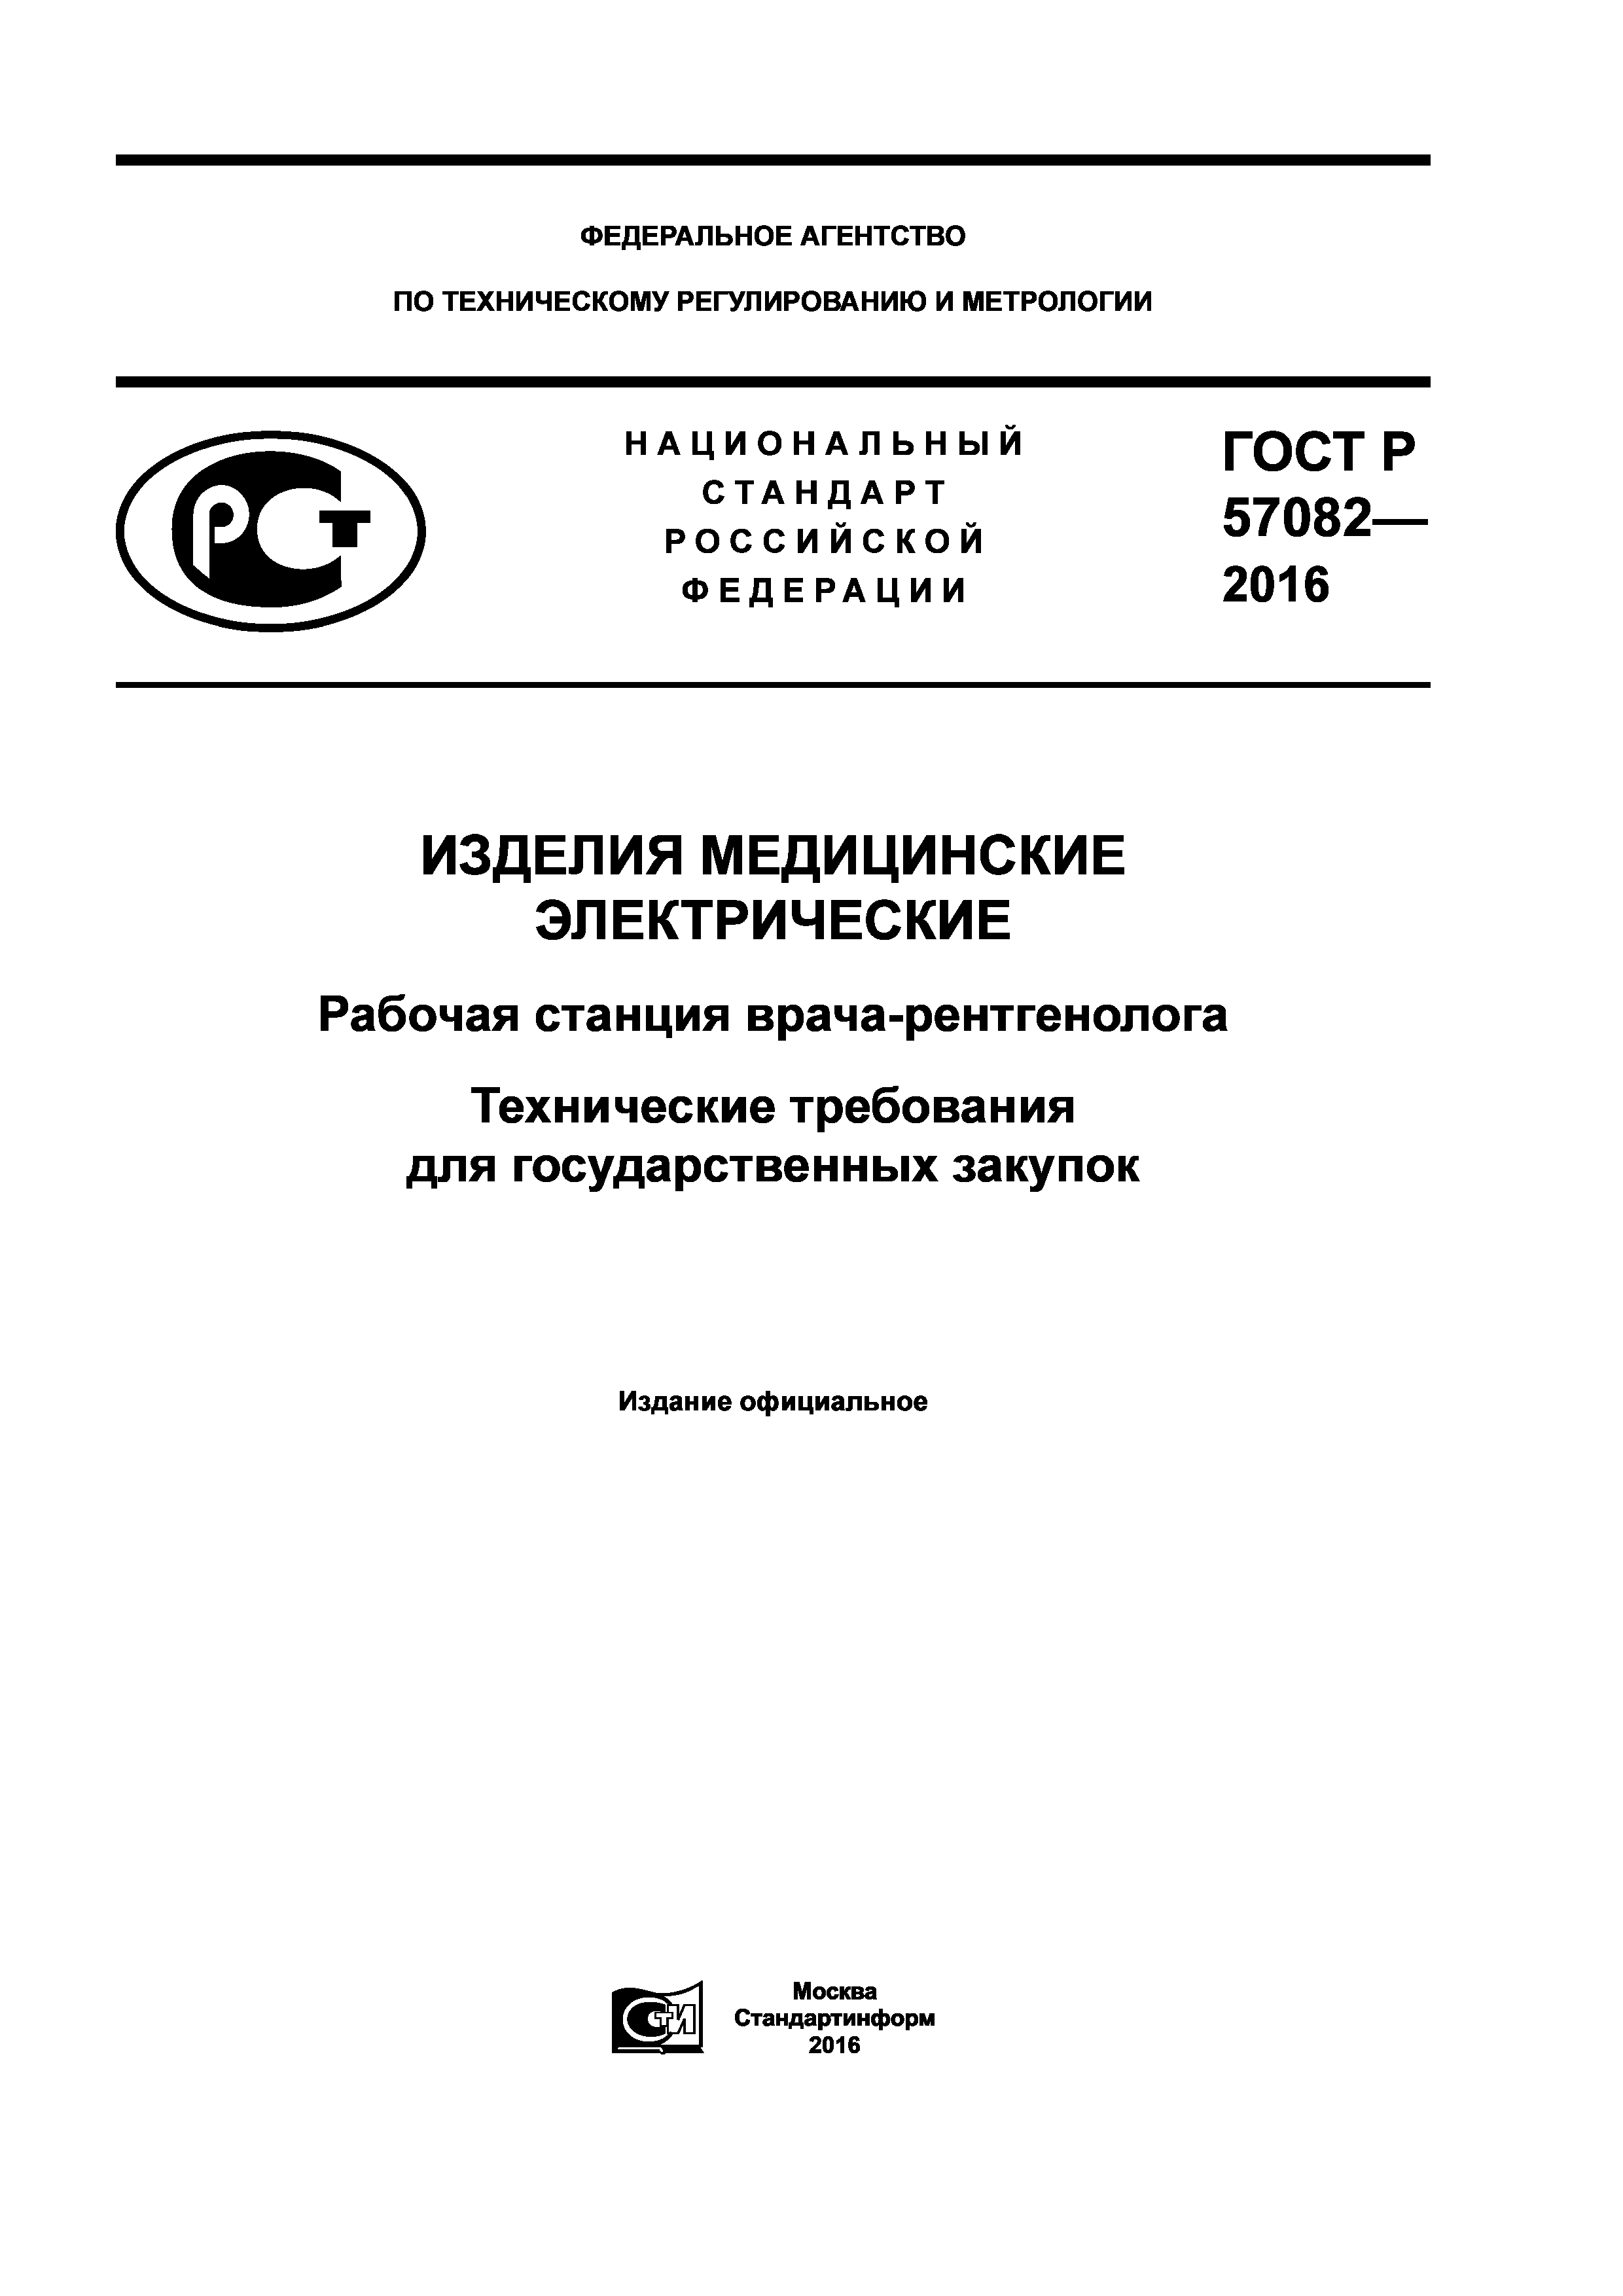 ГОСТ Р 57082-2016